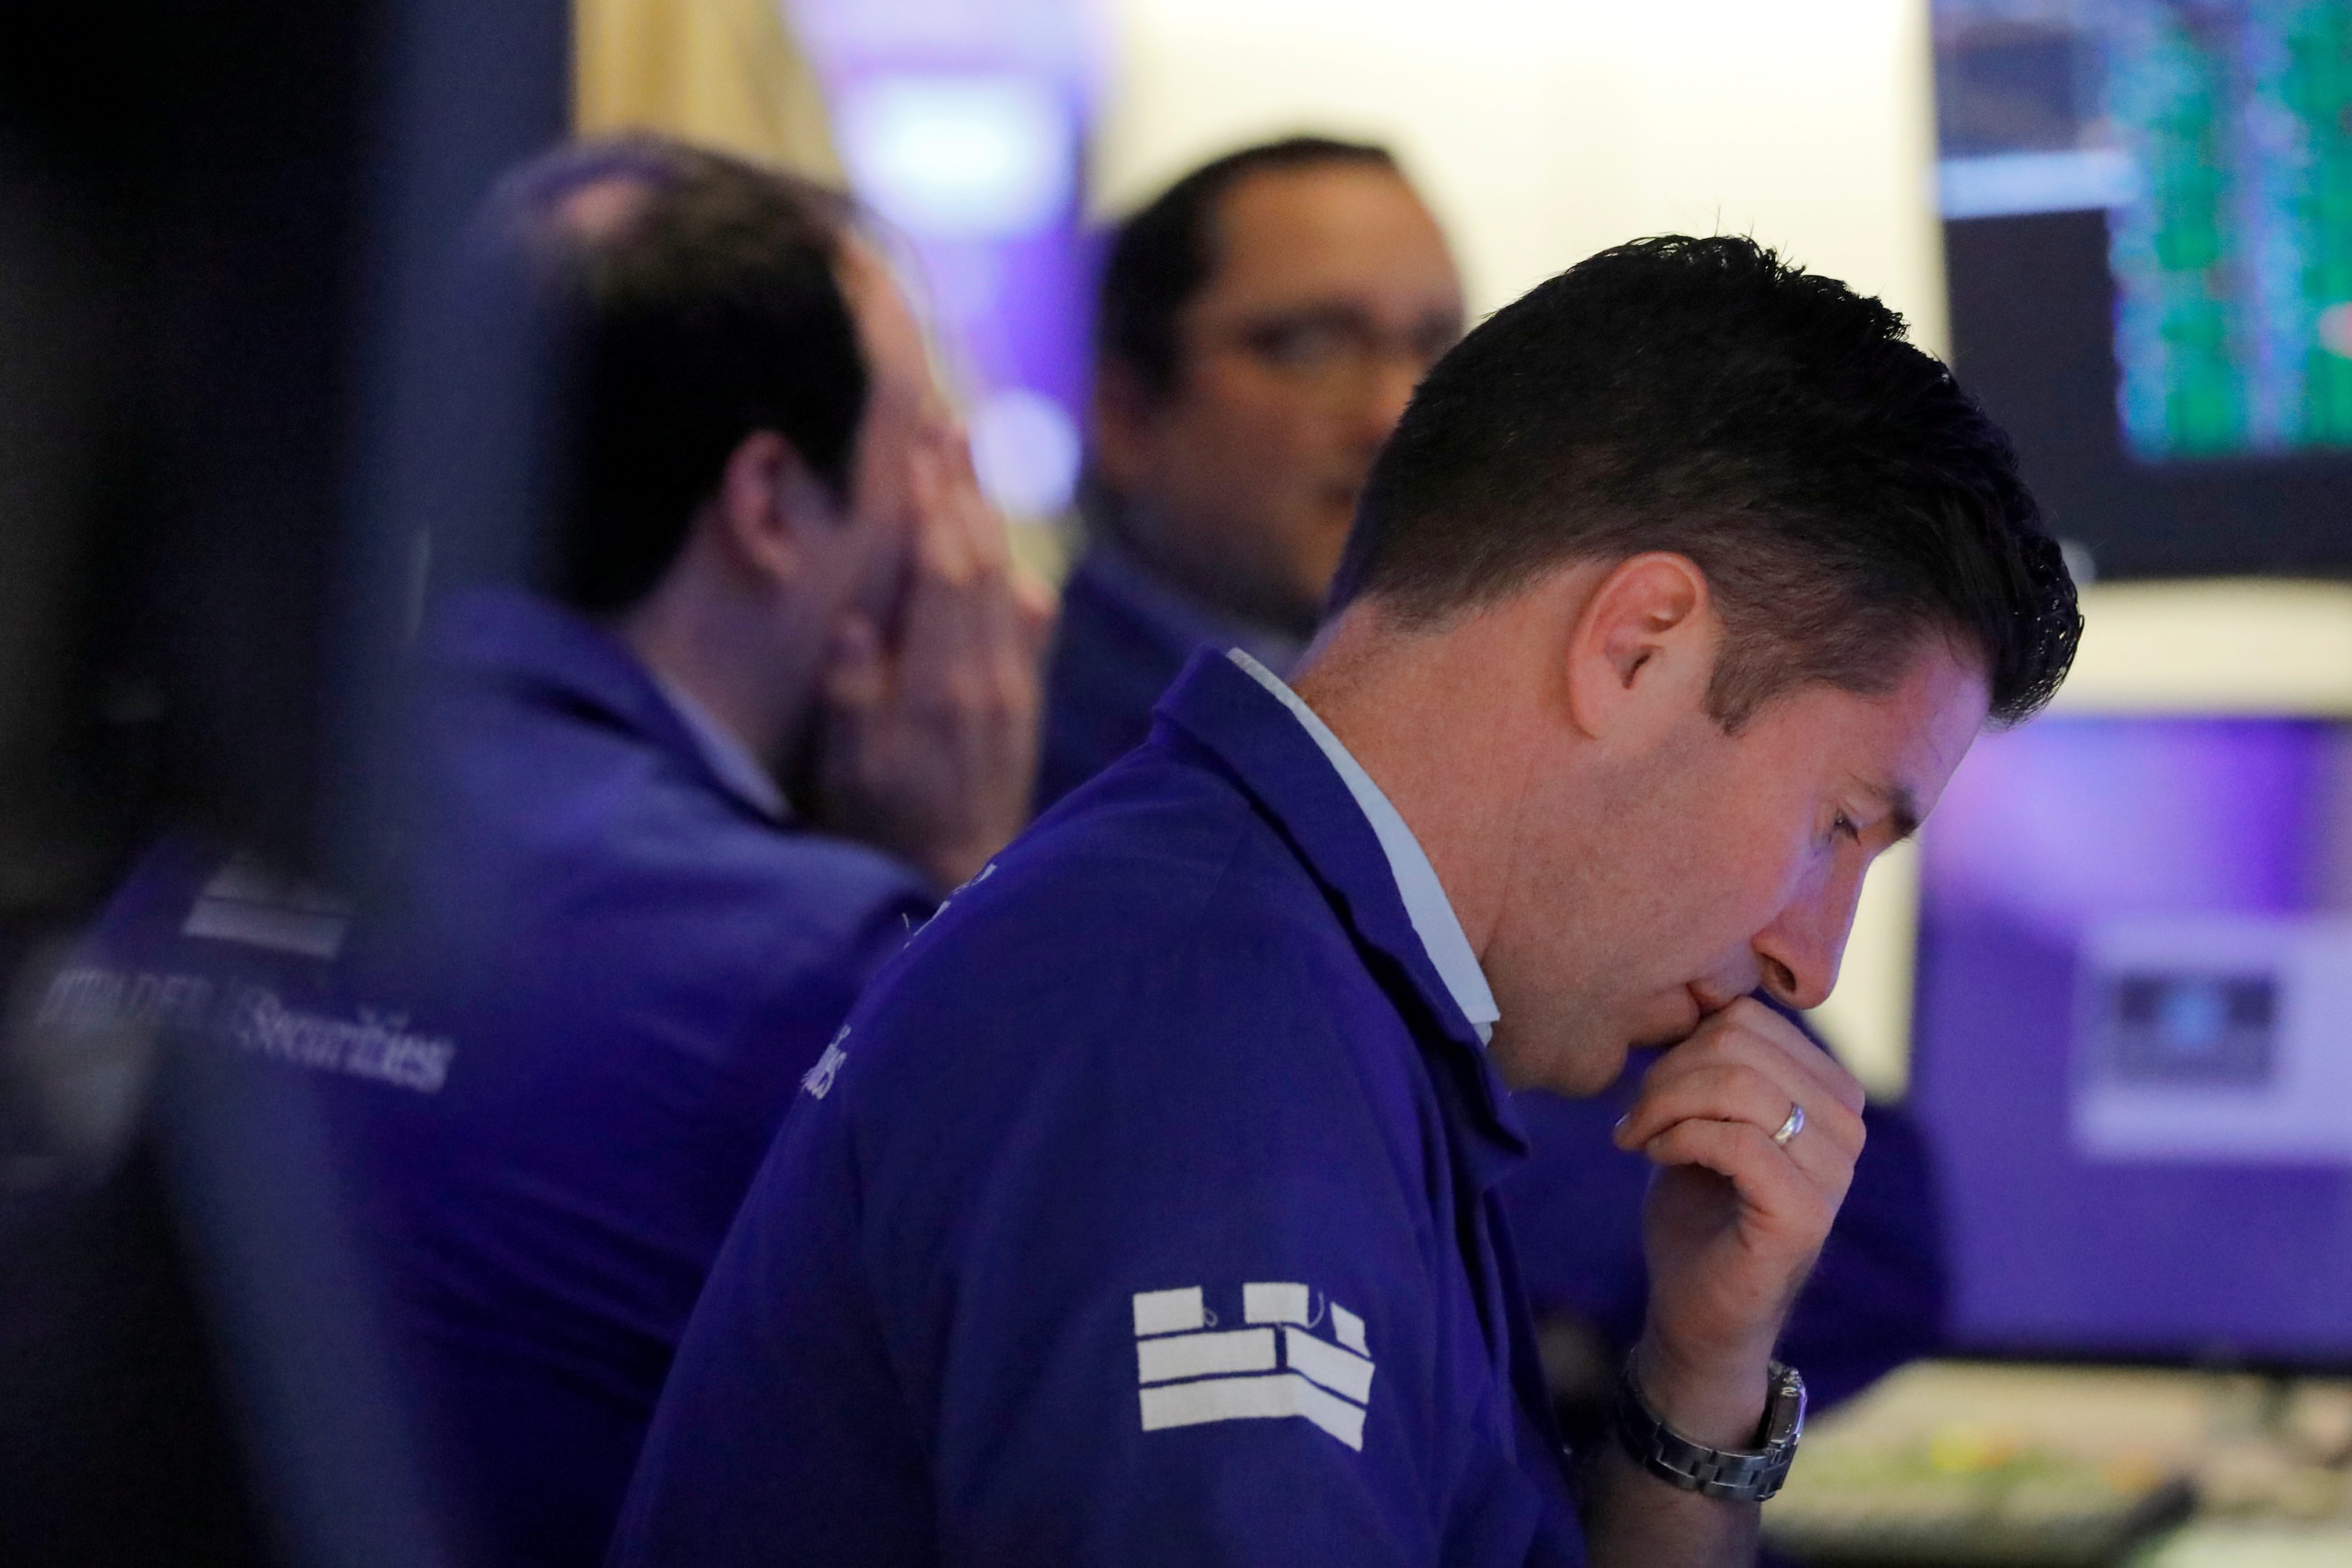 Stocks gain as earnings provide some optimism